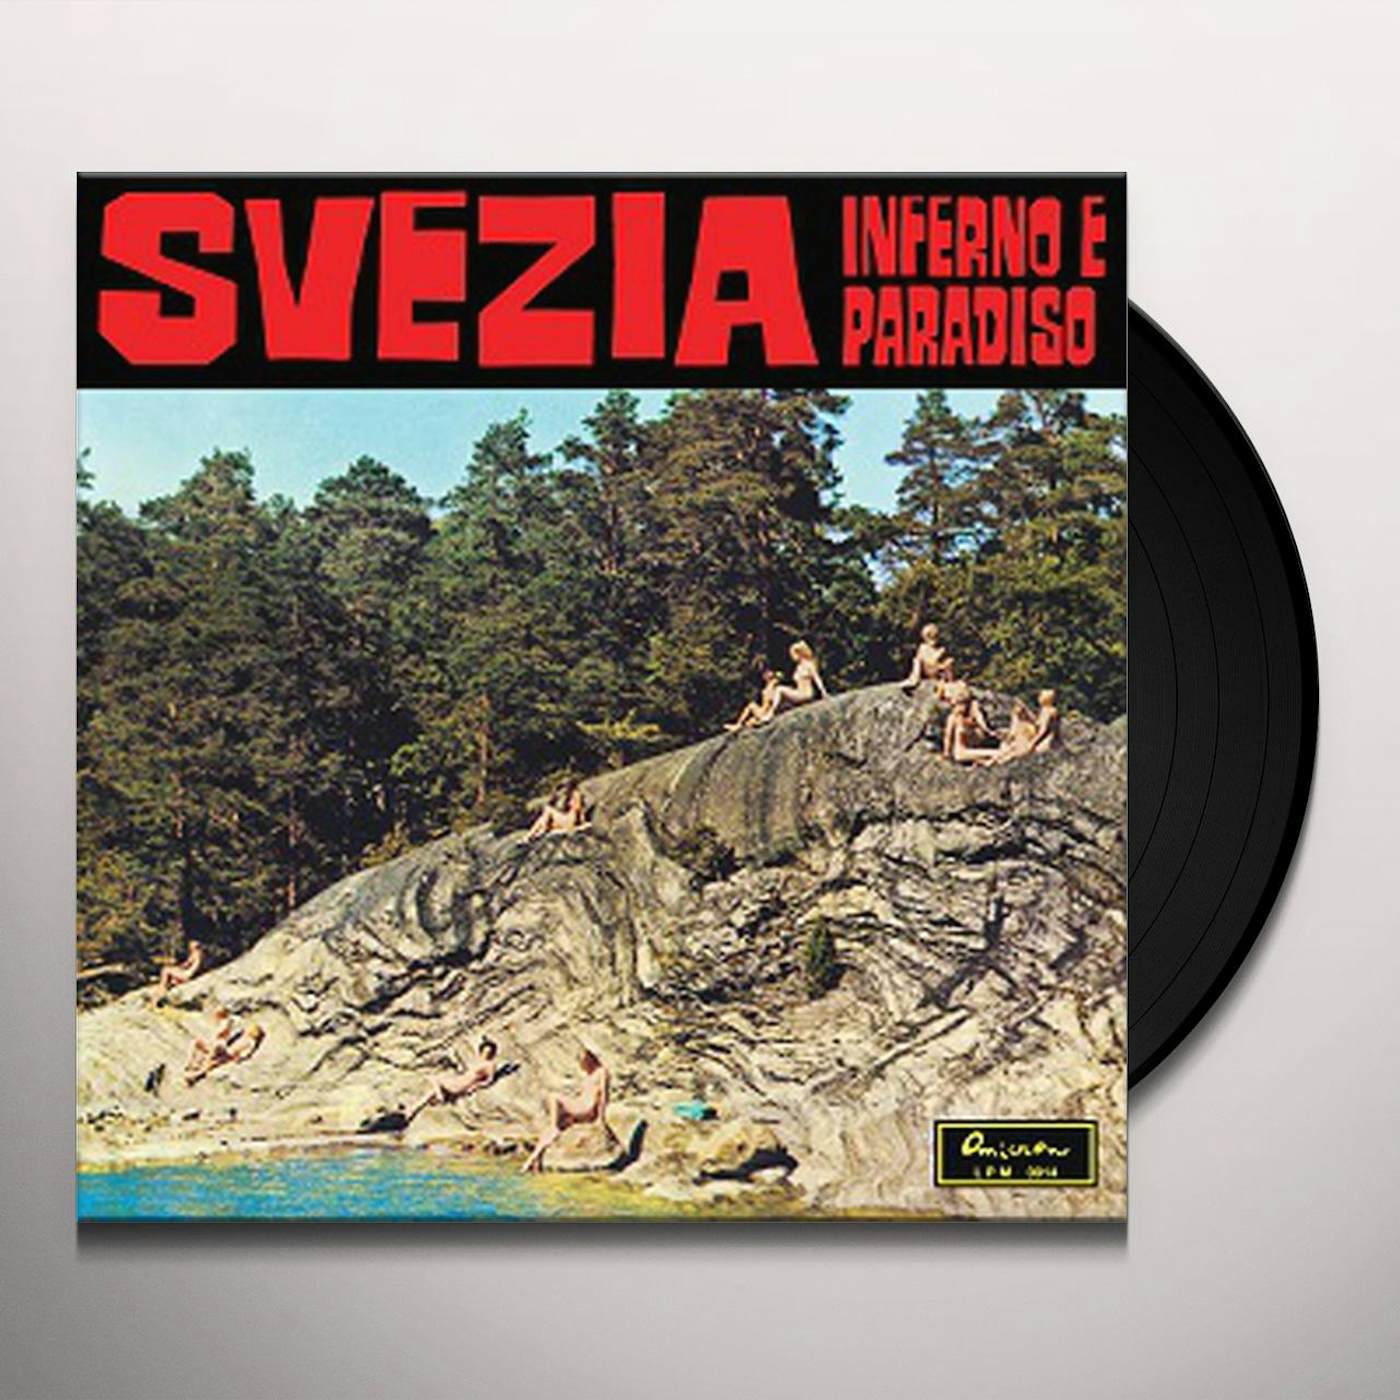 Piero Umiliani SVEZIA INFERNO E PARADISO - Original Soundtrack Vinyl Record